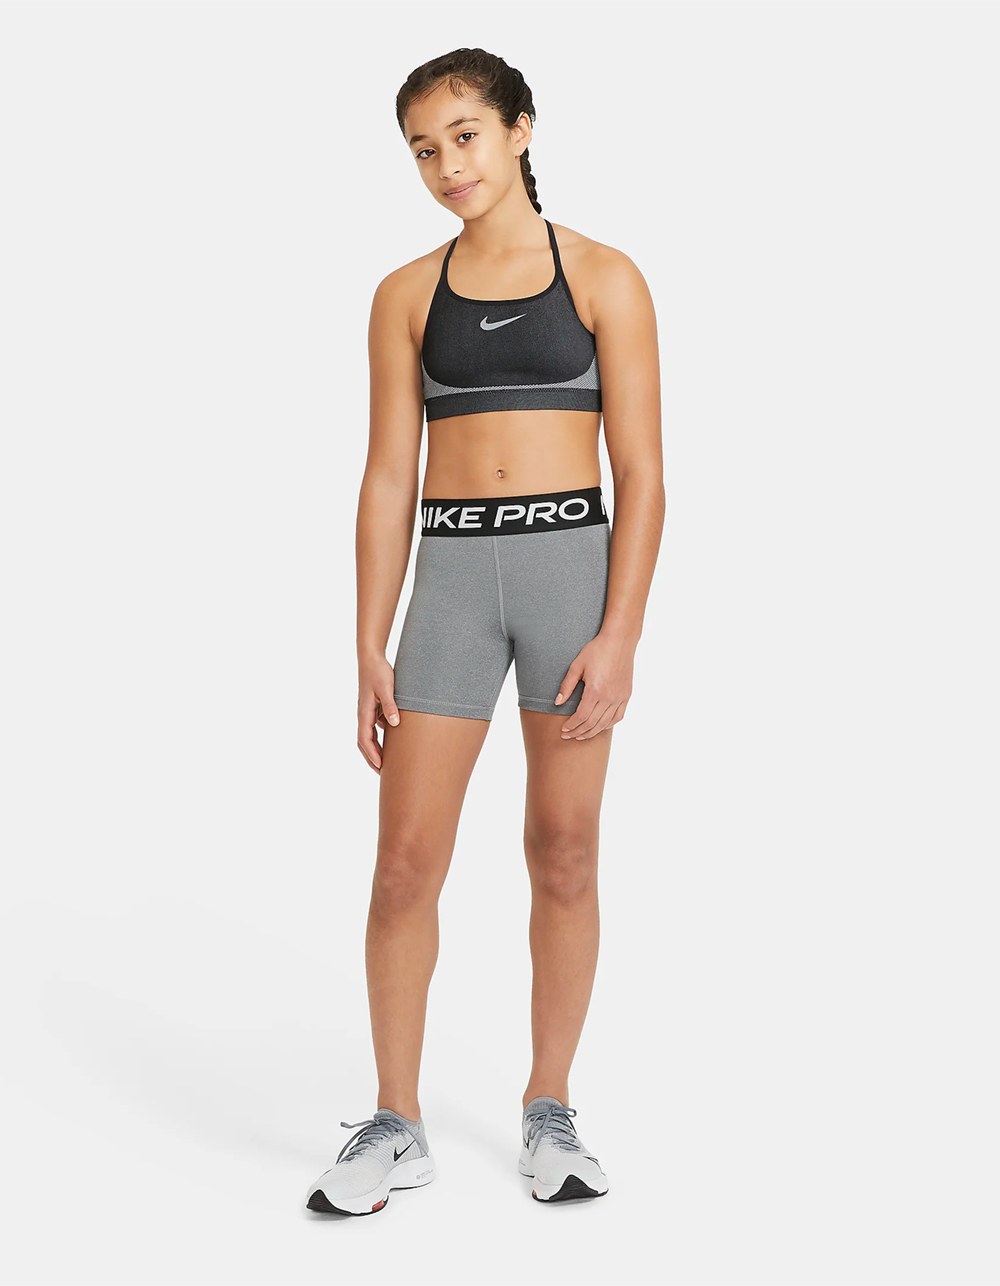 Nike Pro Shorts, Girl's Short